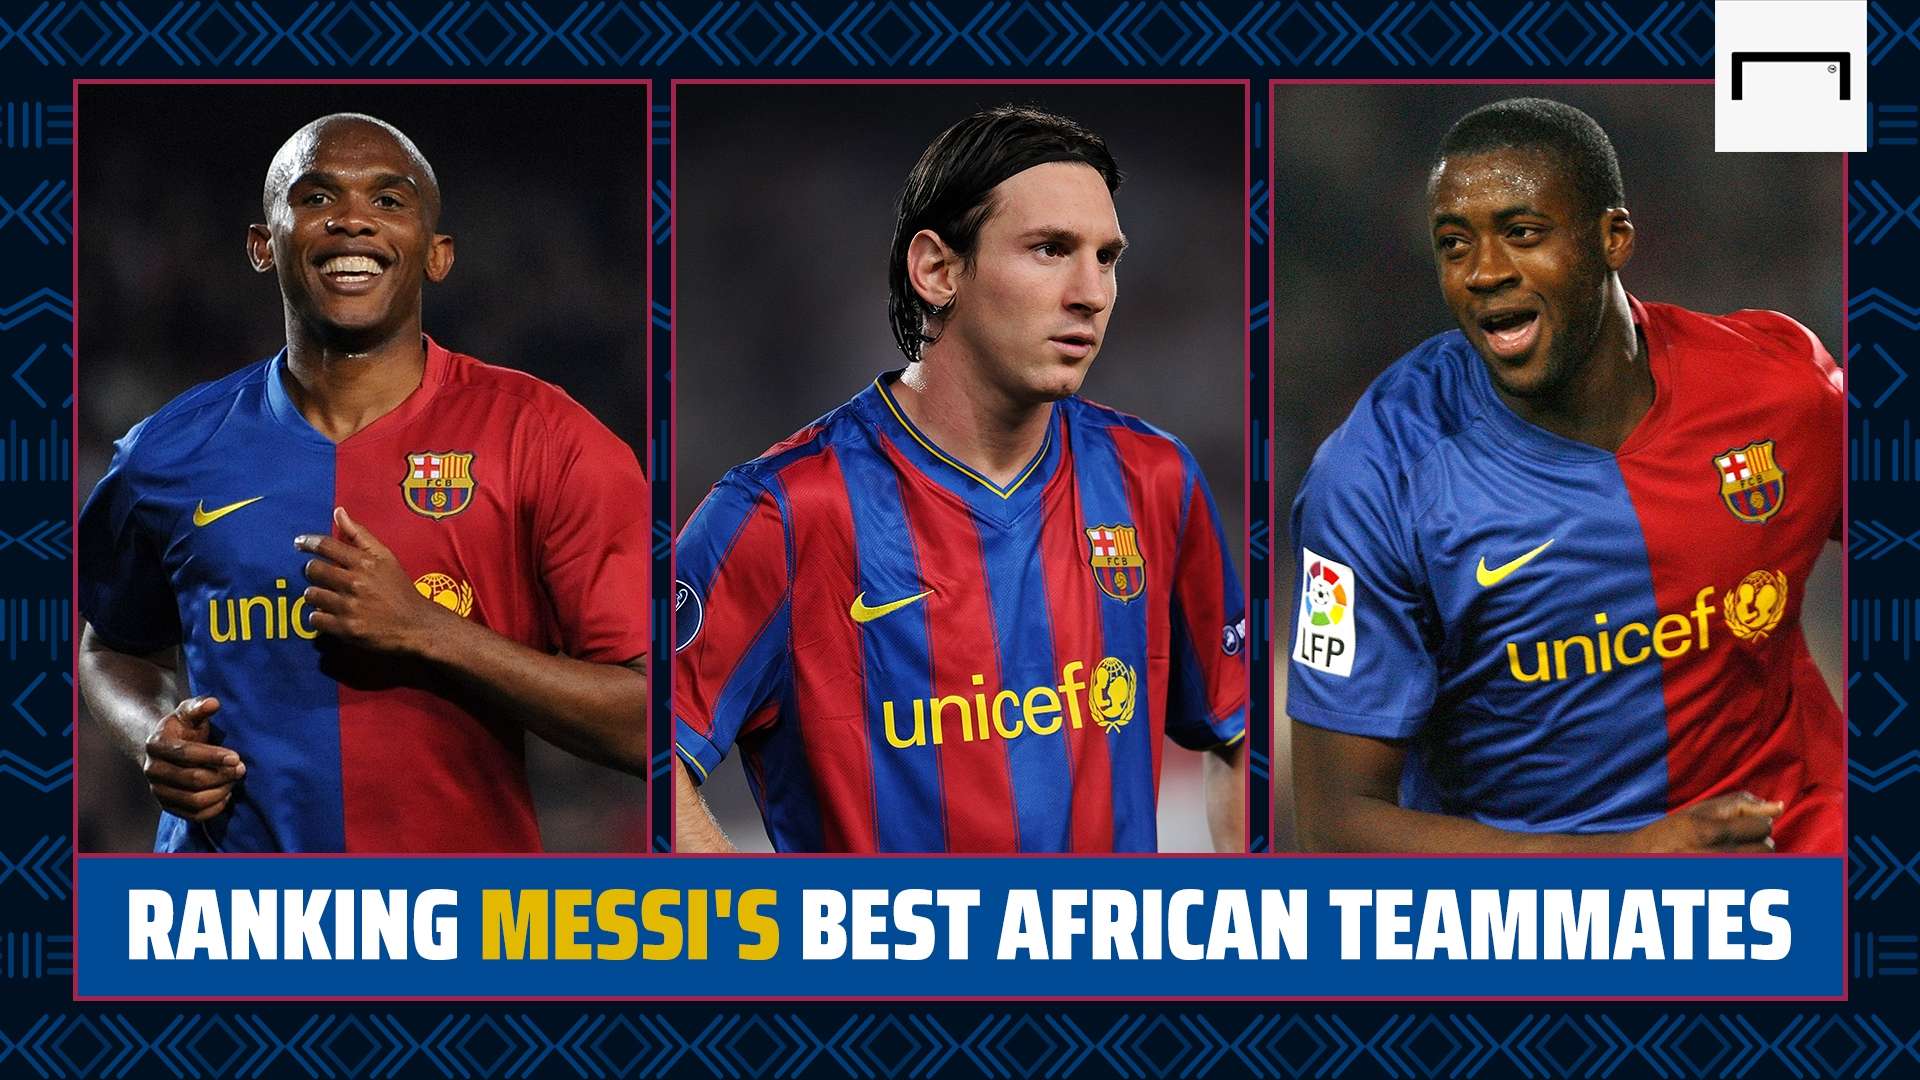 Ranking Messi's best African teammates